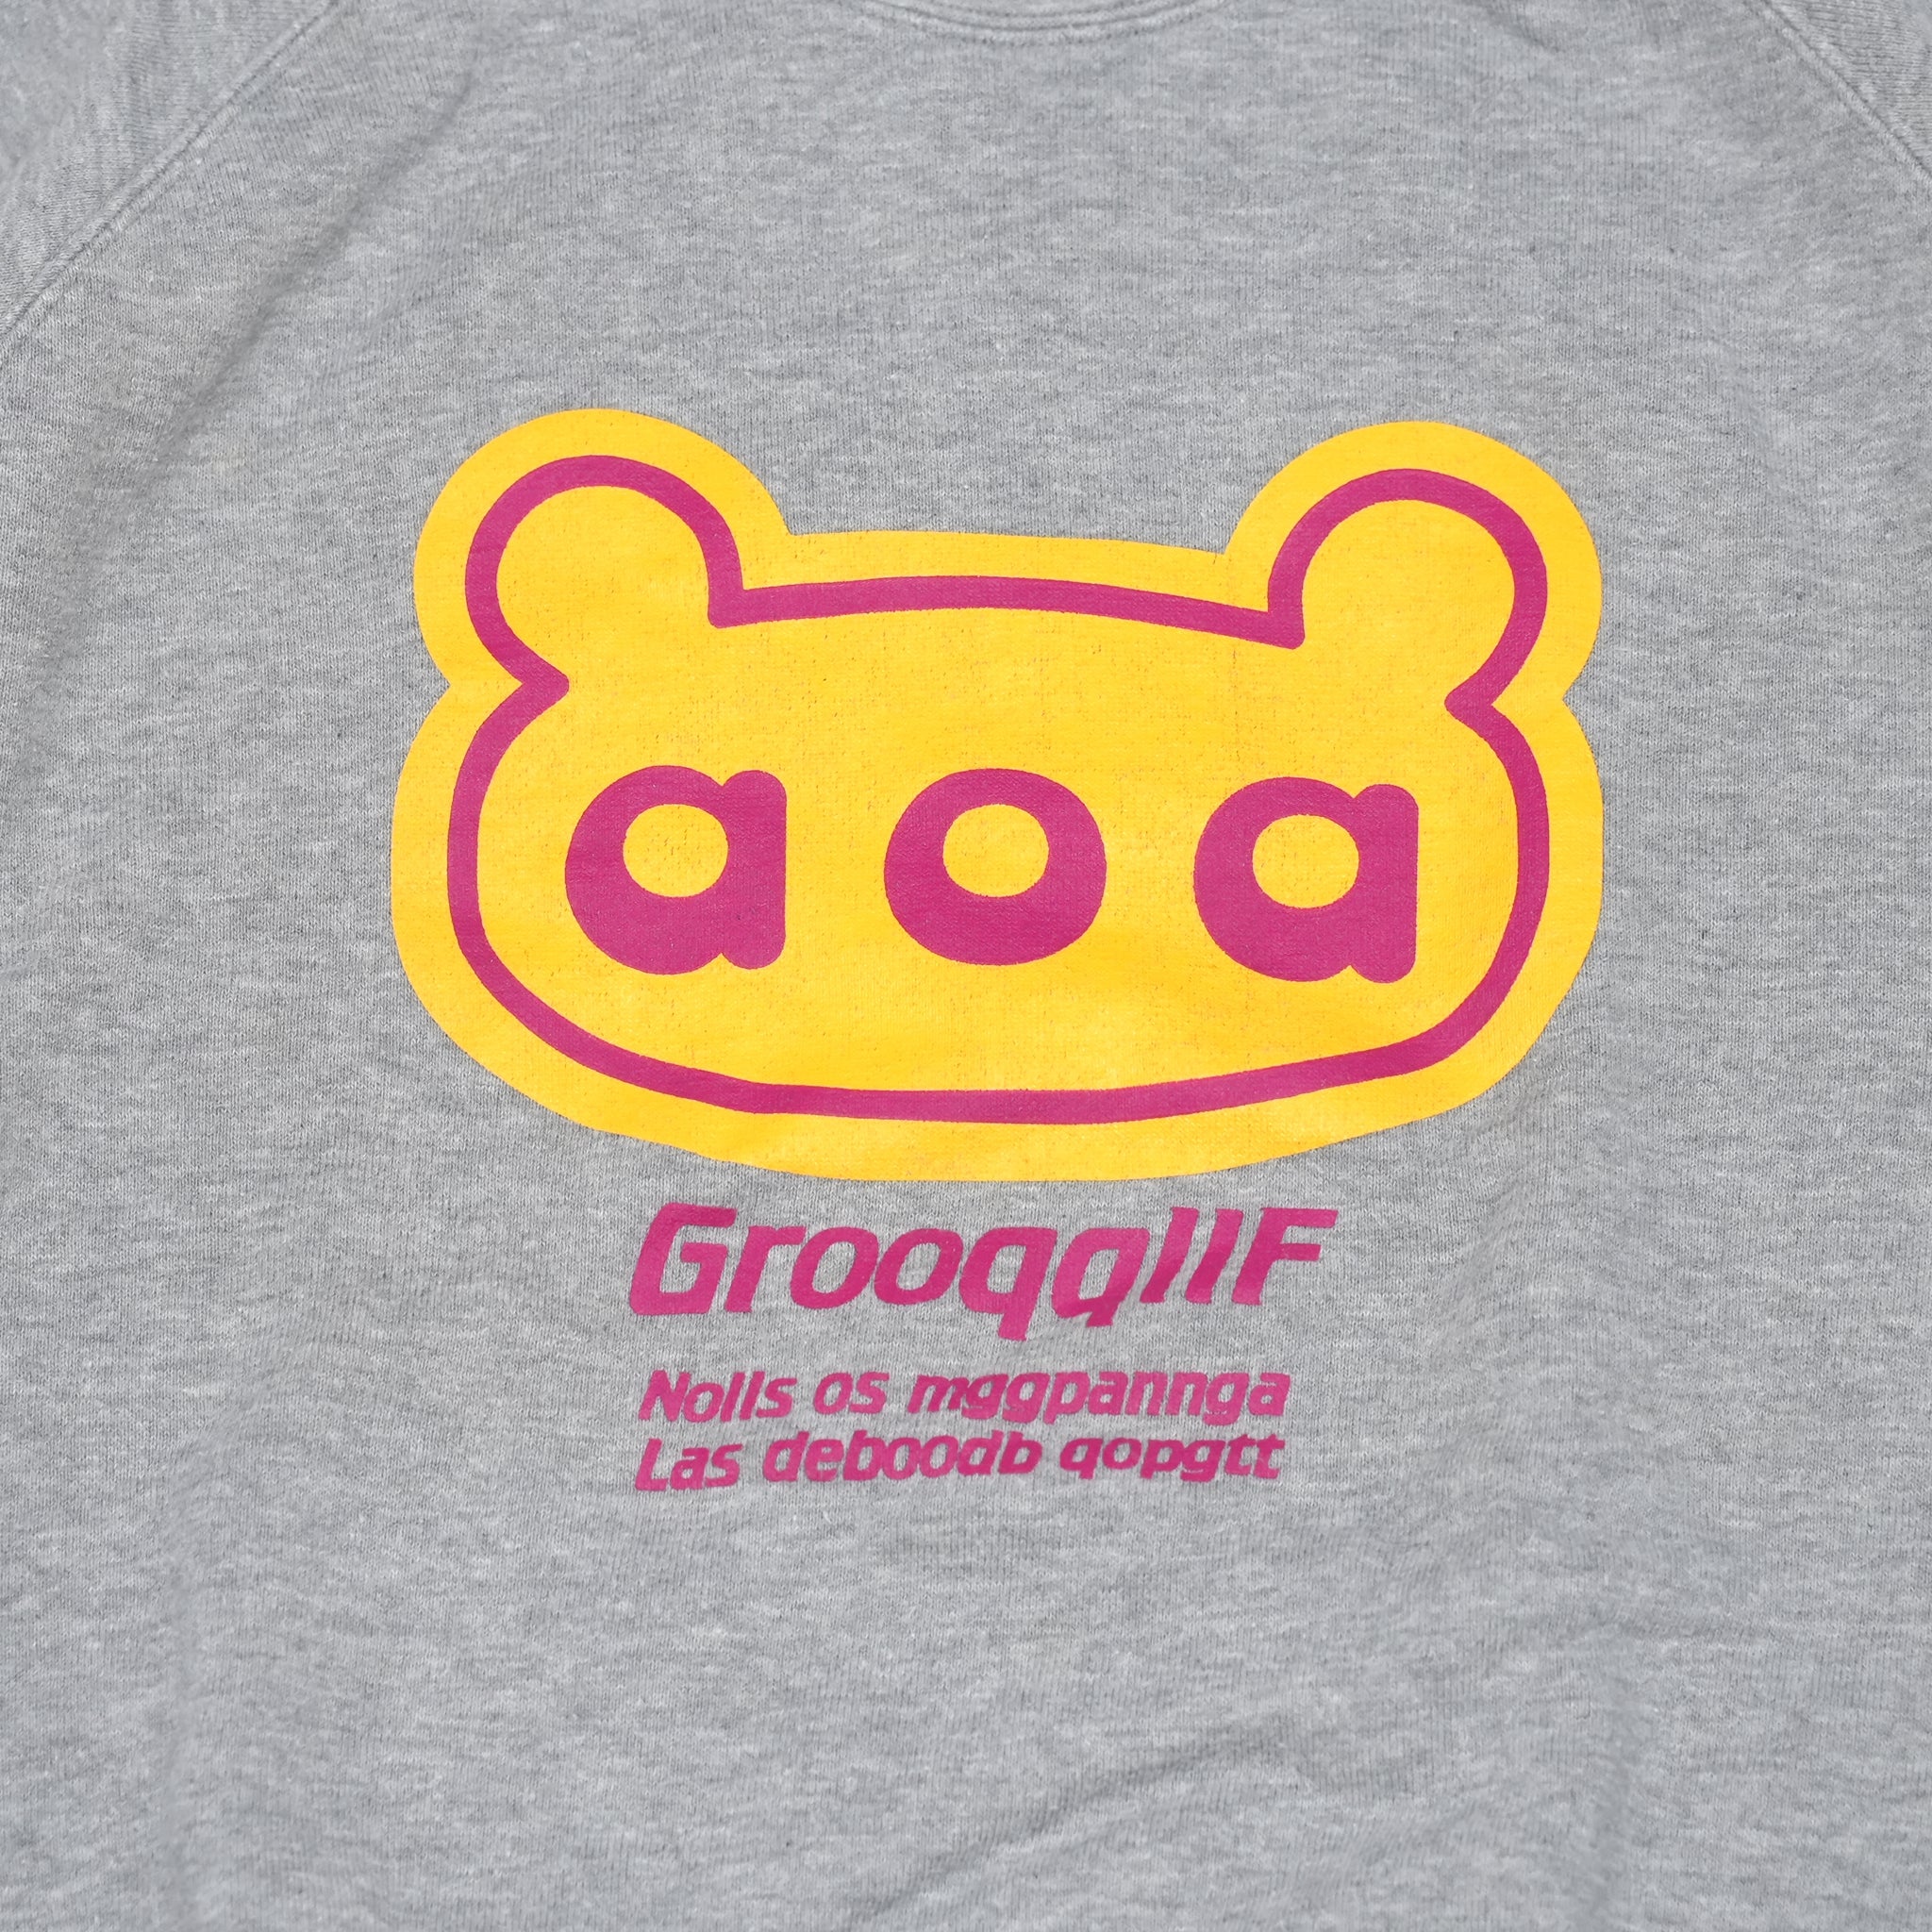 No:aoasweat002 |  Name:aoa Sweat shirts | Color:Gray | Size:Free【animal of airs_アニマル オブ エアーズ】